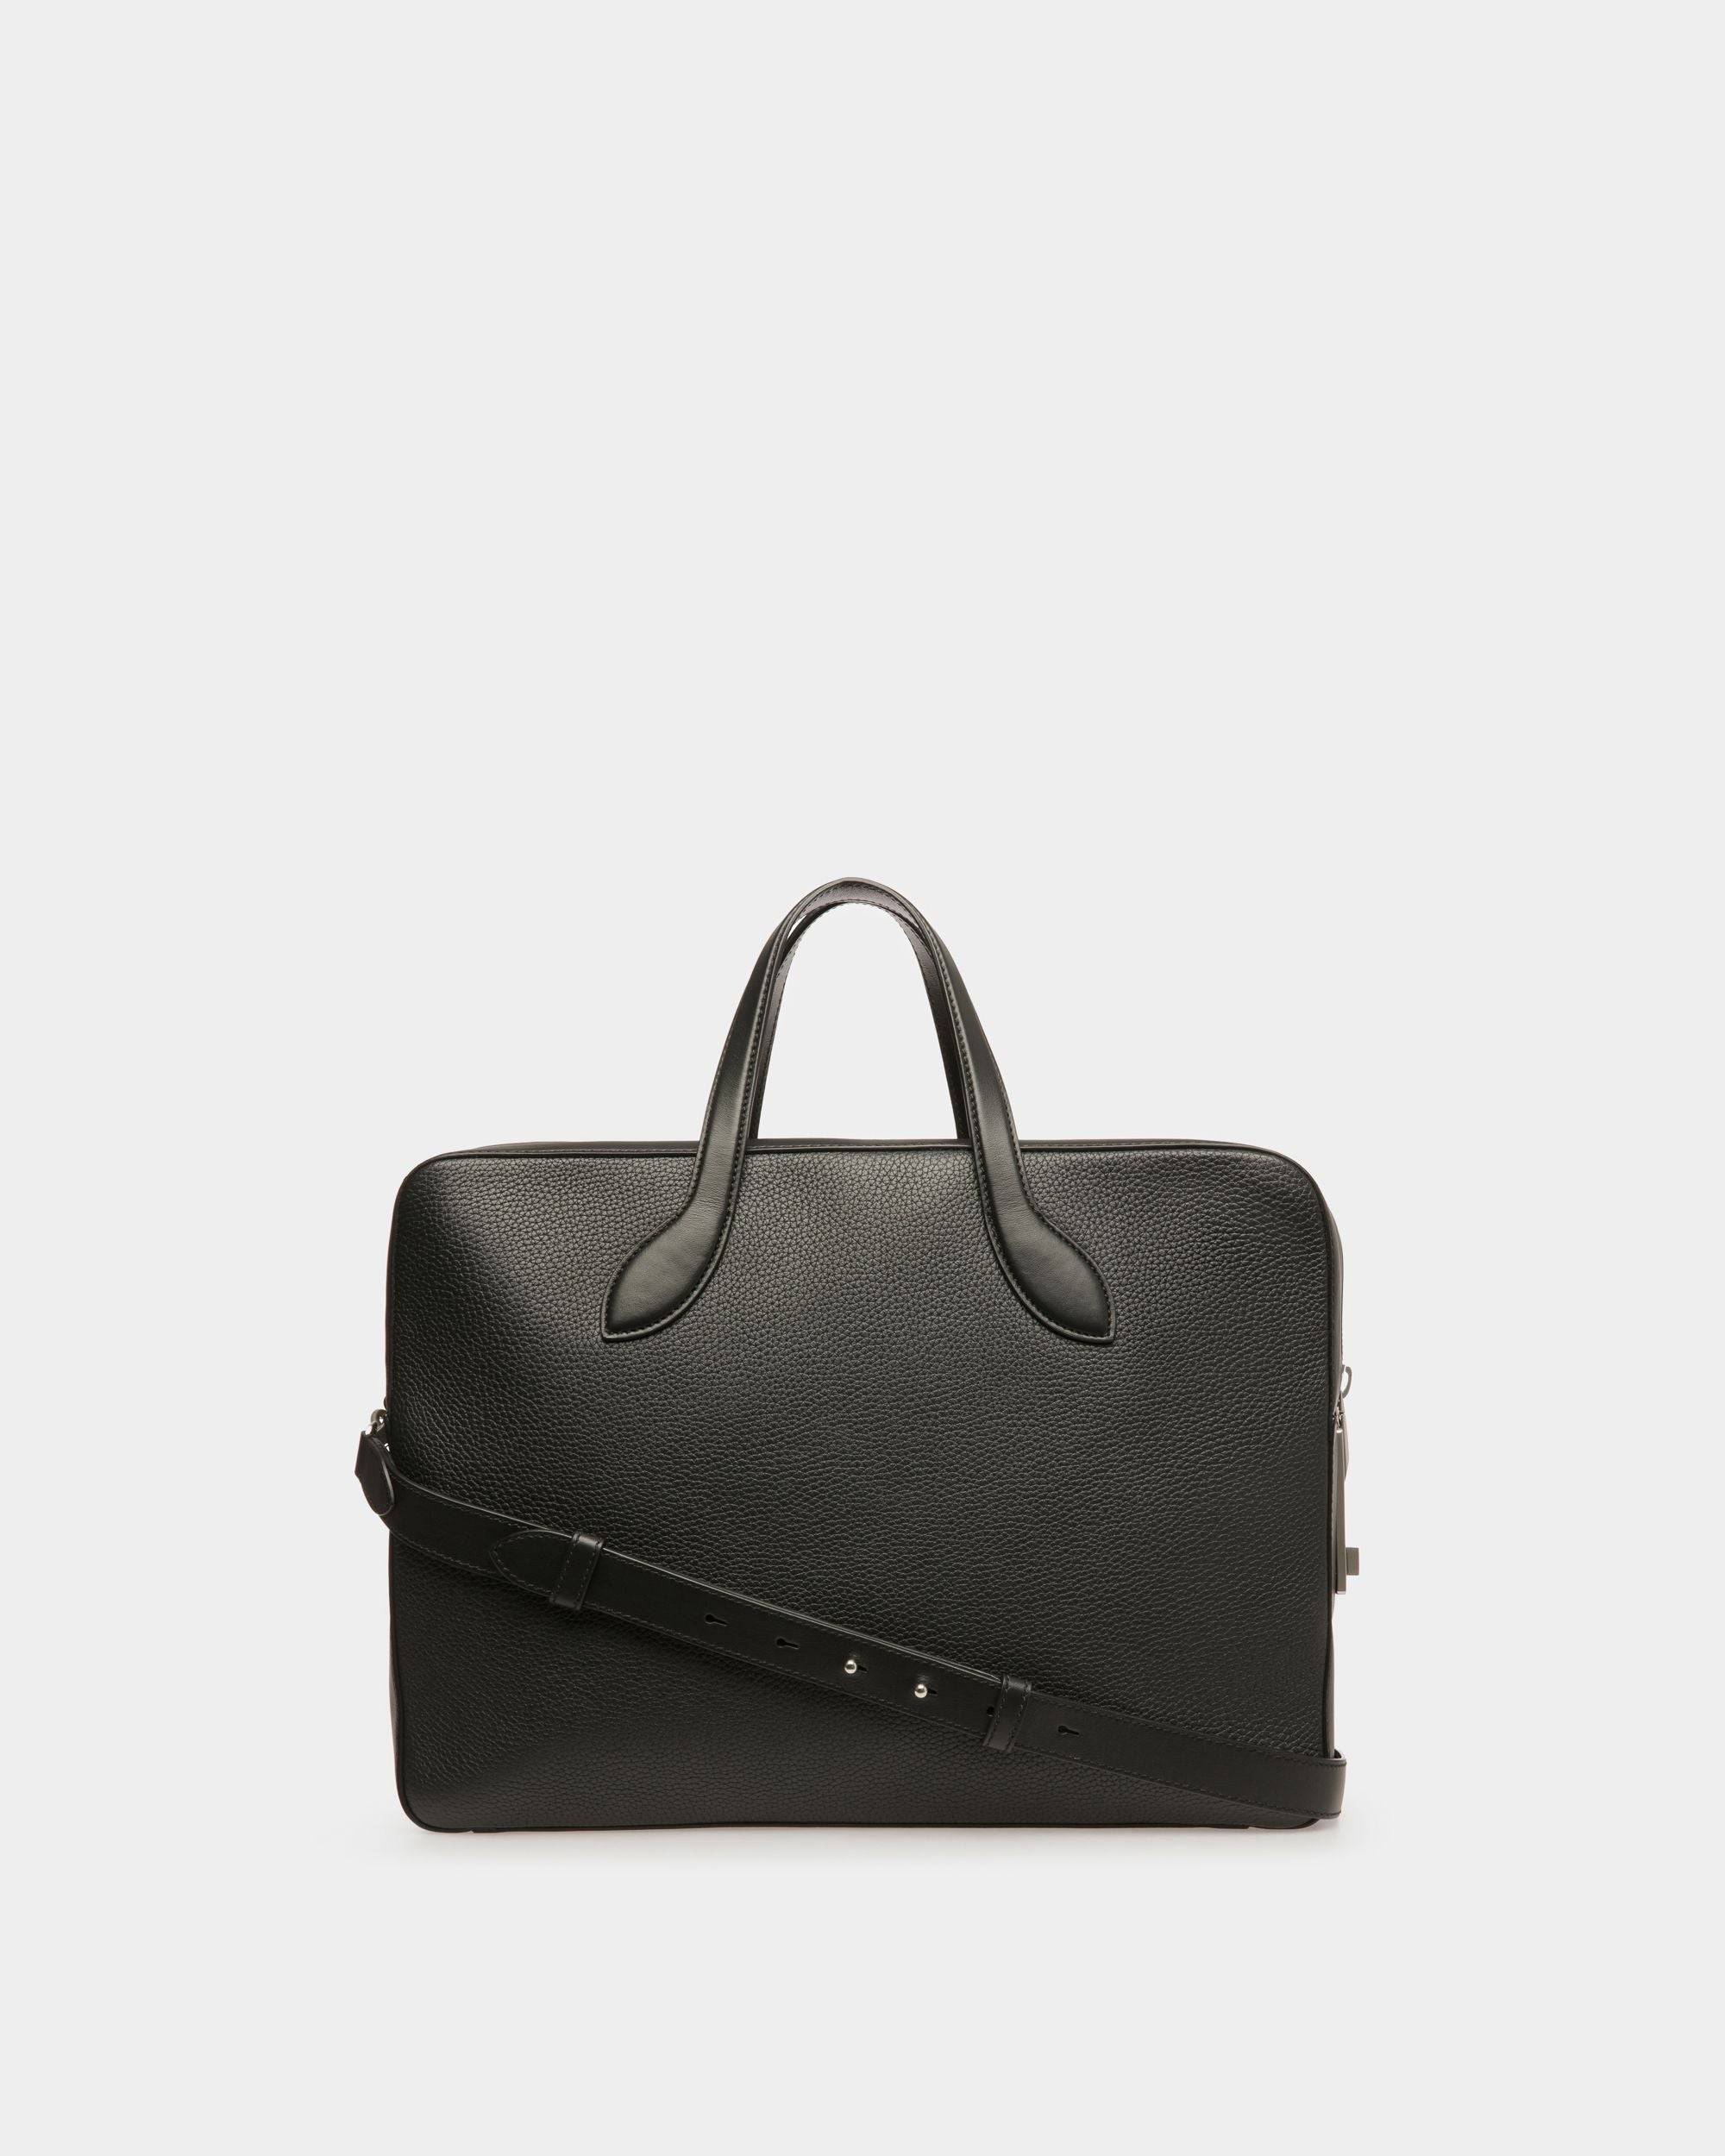 Gentleman | Men's Business Bag | Black Leather | Bally | Still Life Back